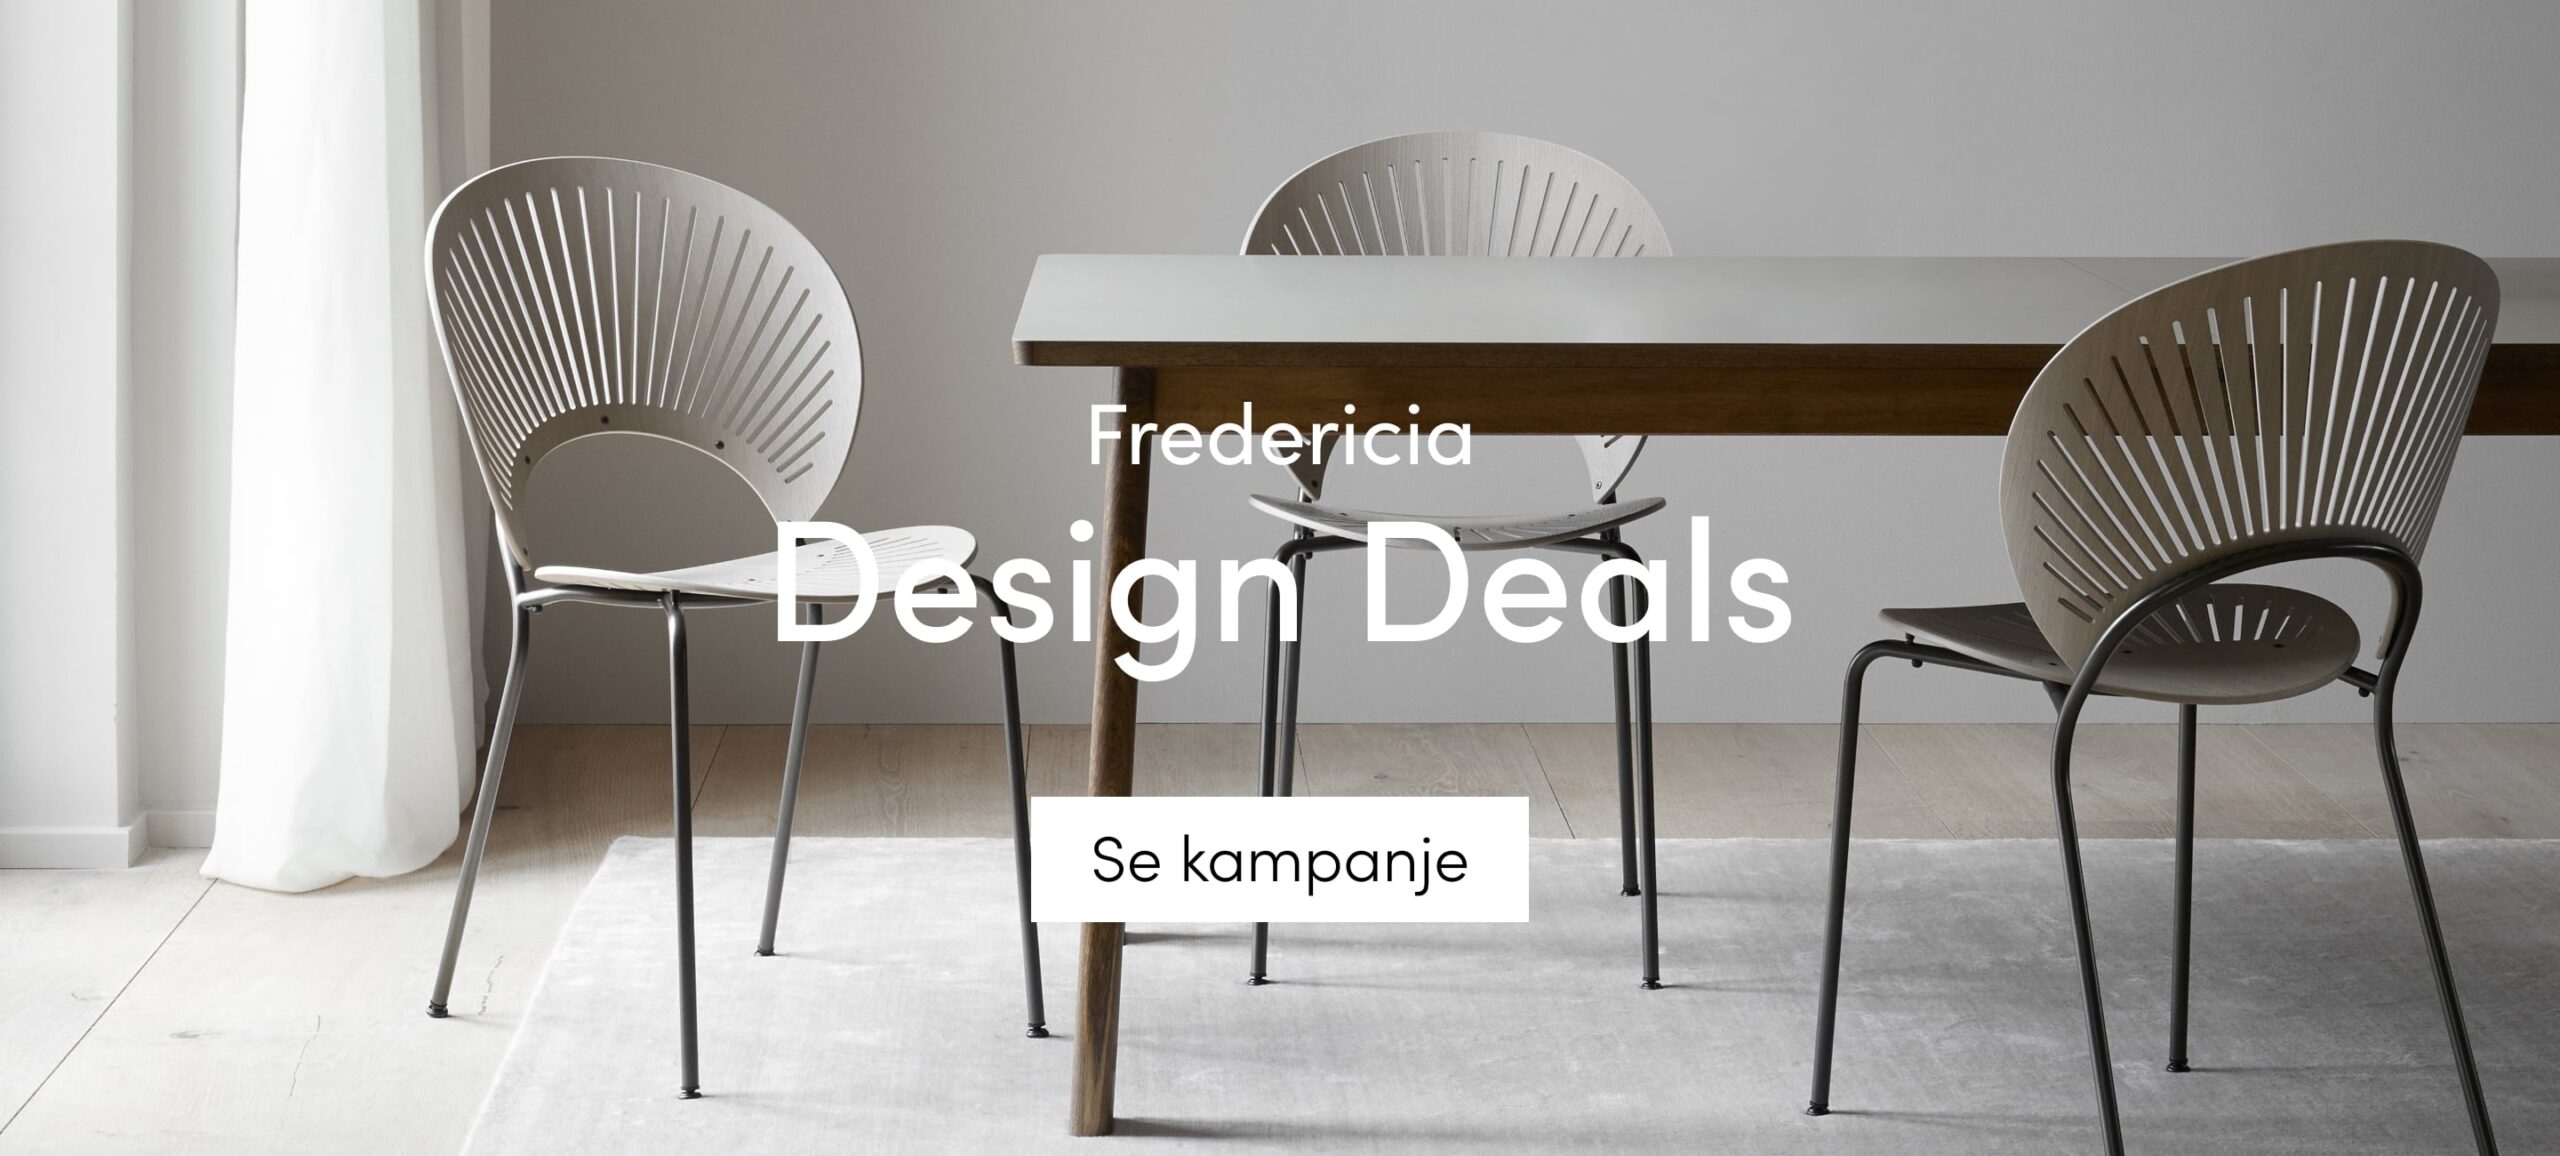 Fredericia design deals table